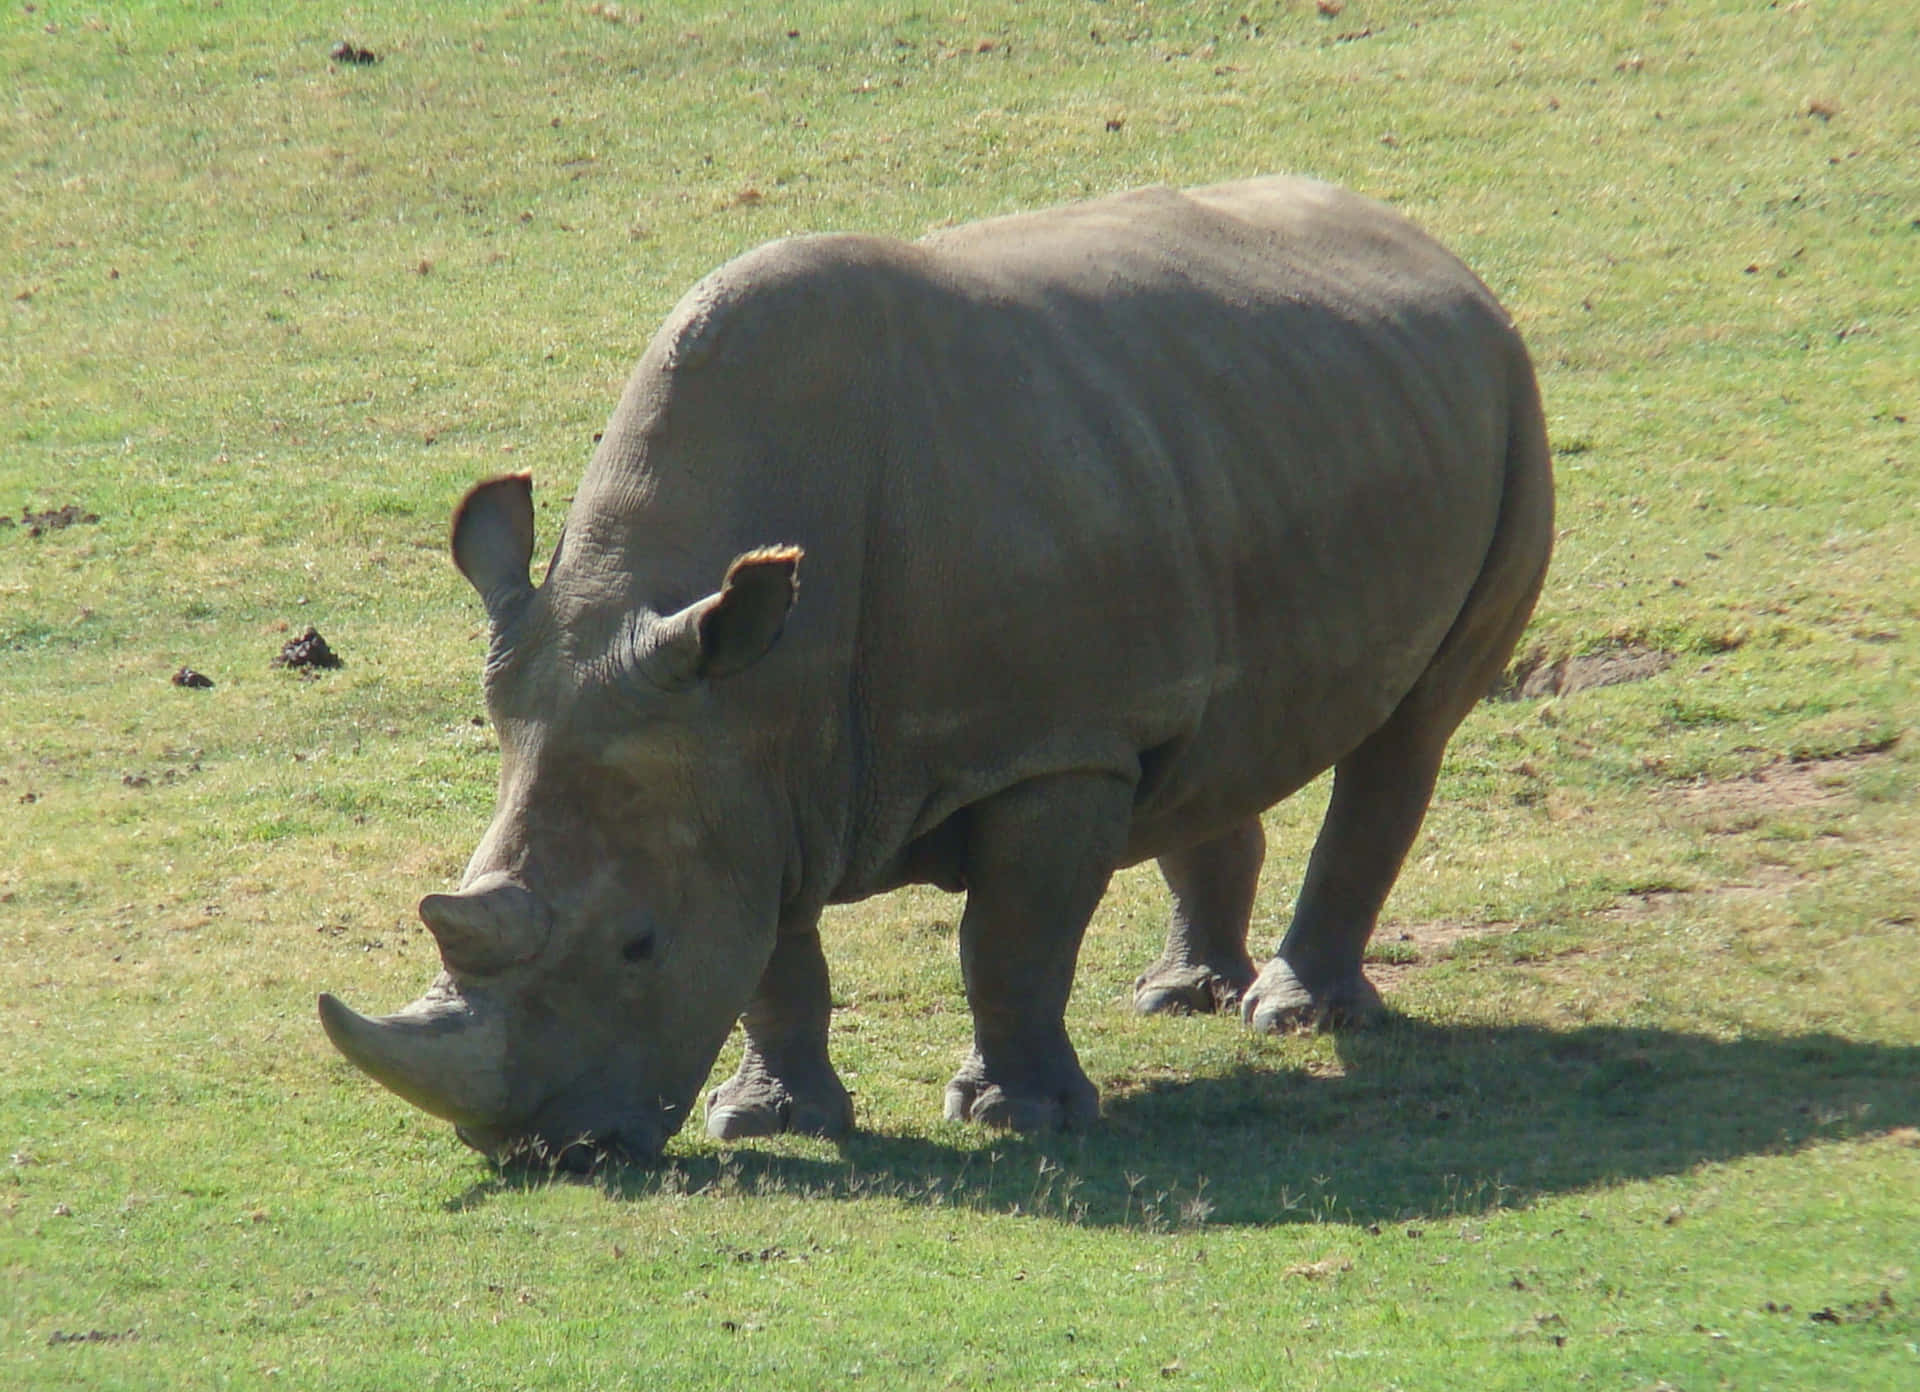 A majestic rhinoceros peacefully walking in the Serengeti